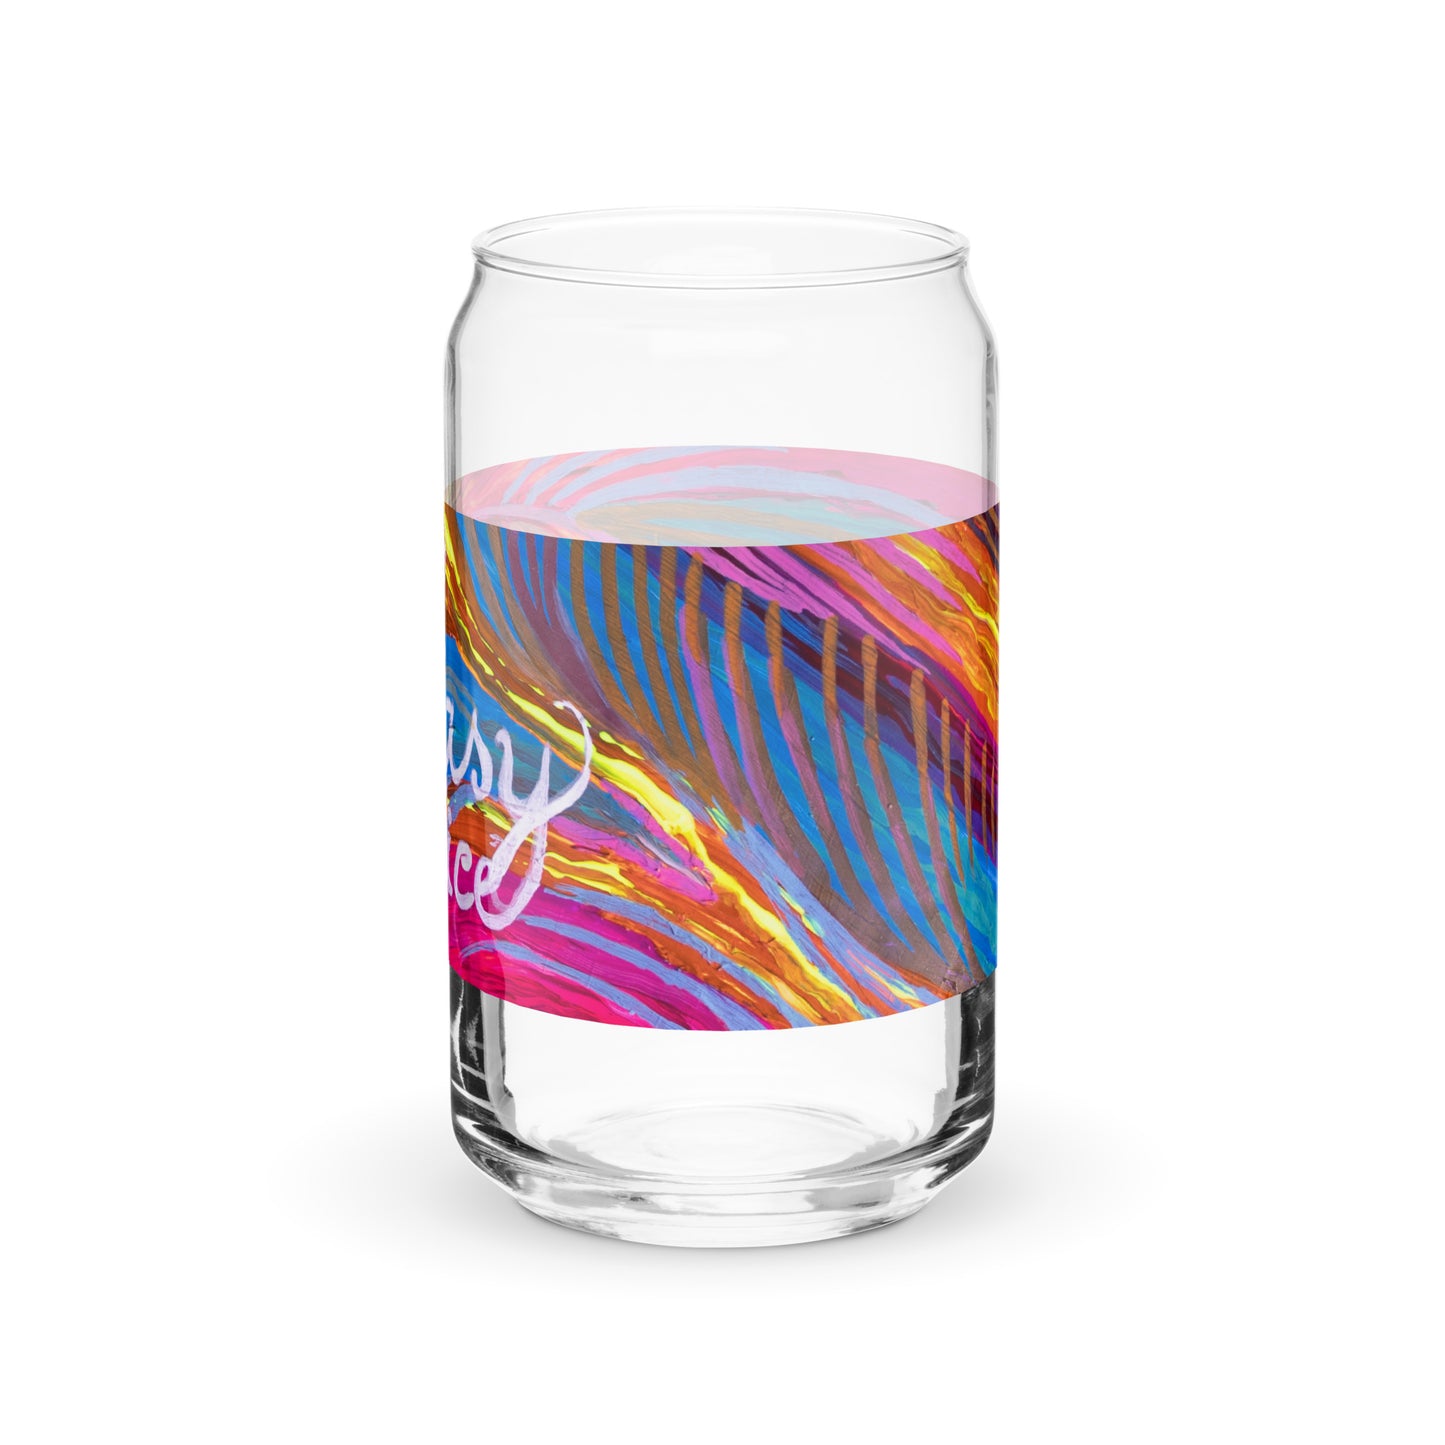 Hewkii "Ecstasy Juice" glass